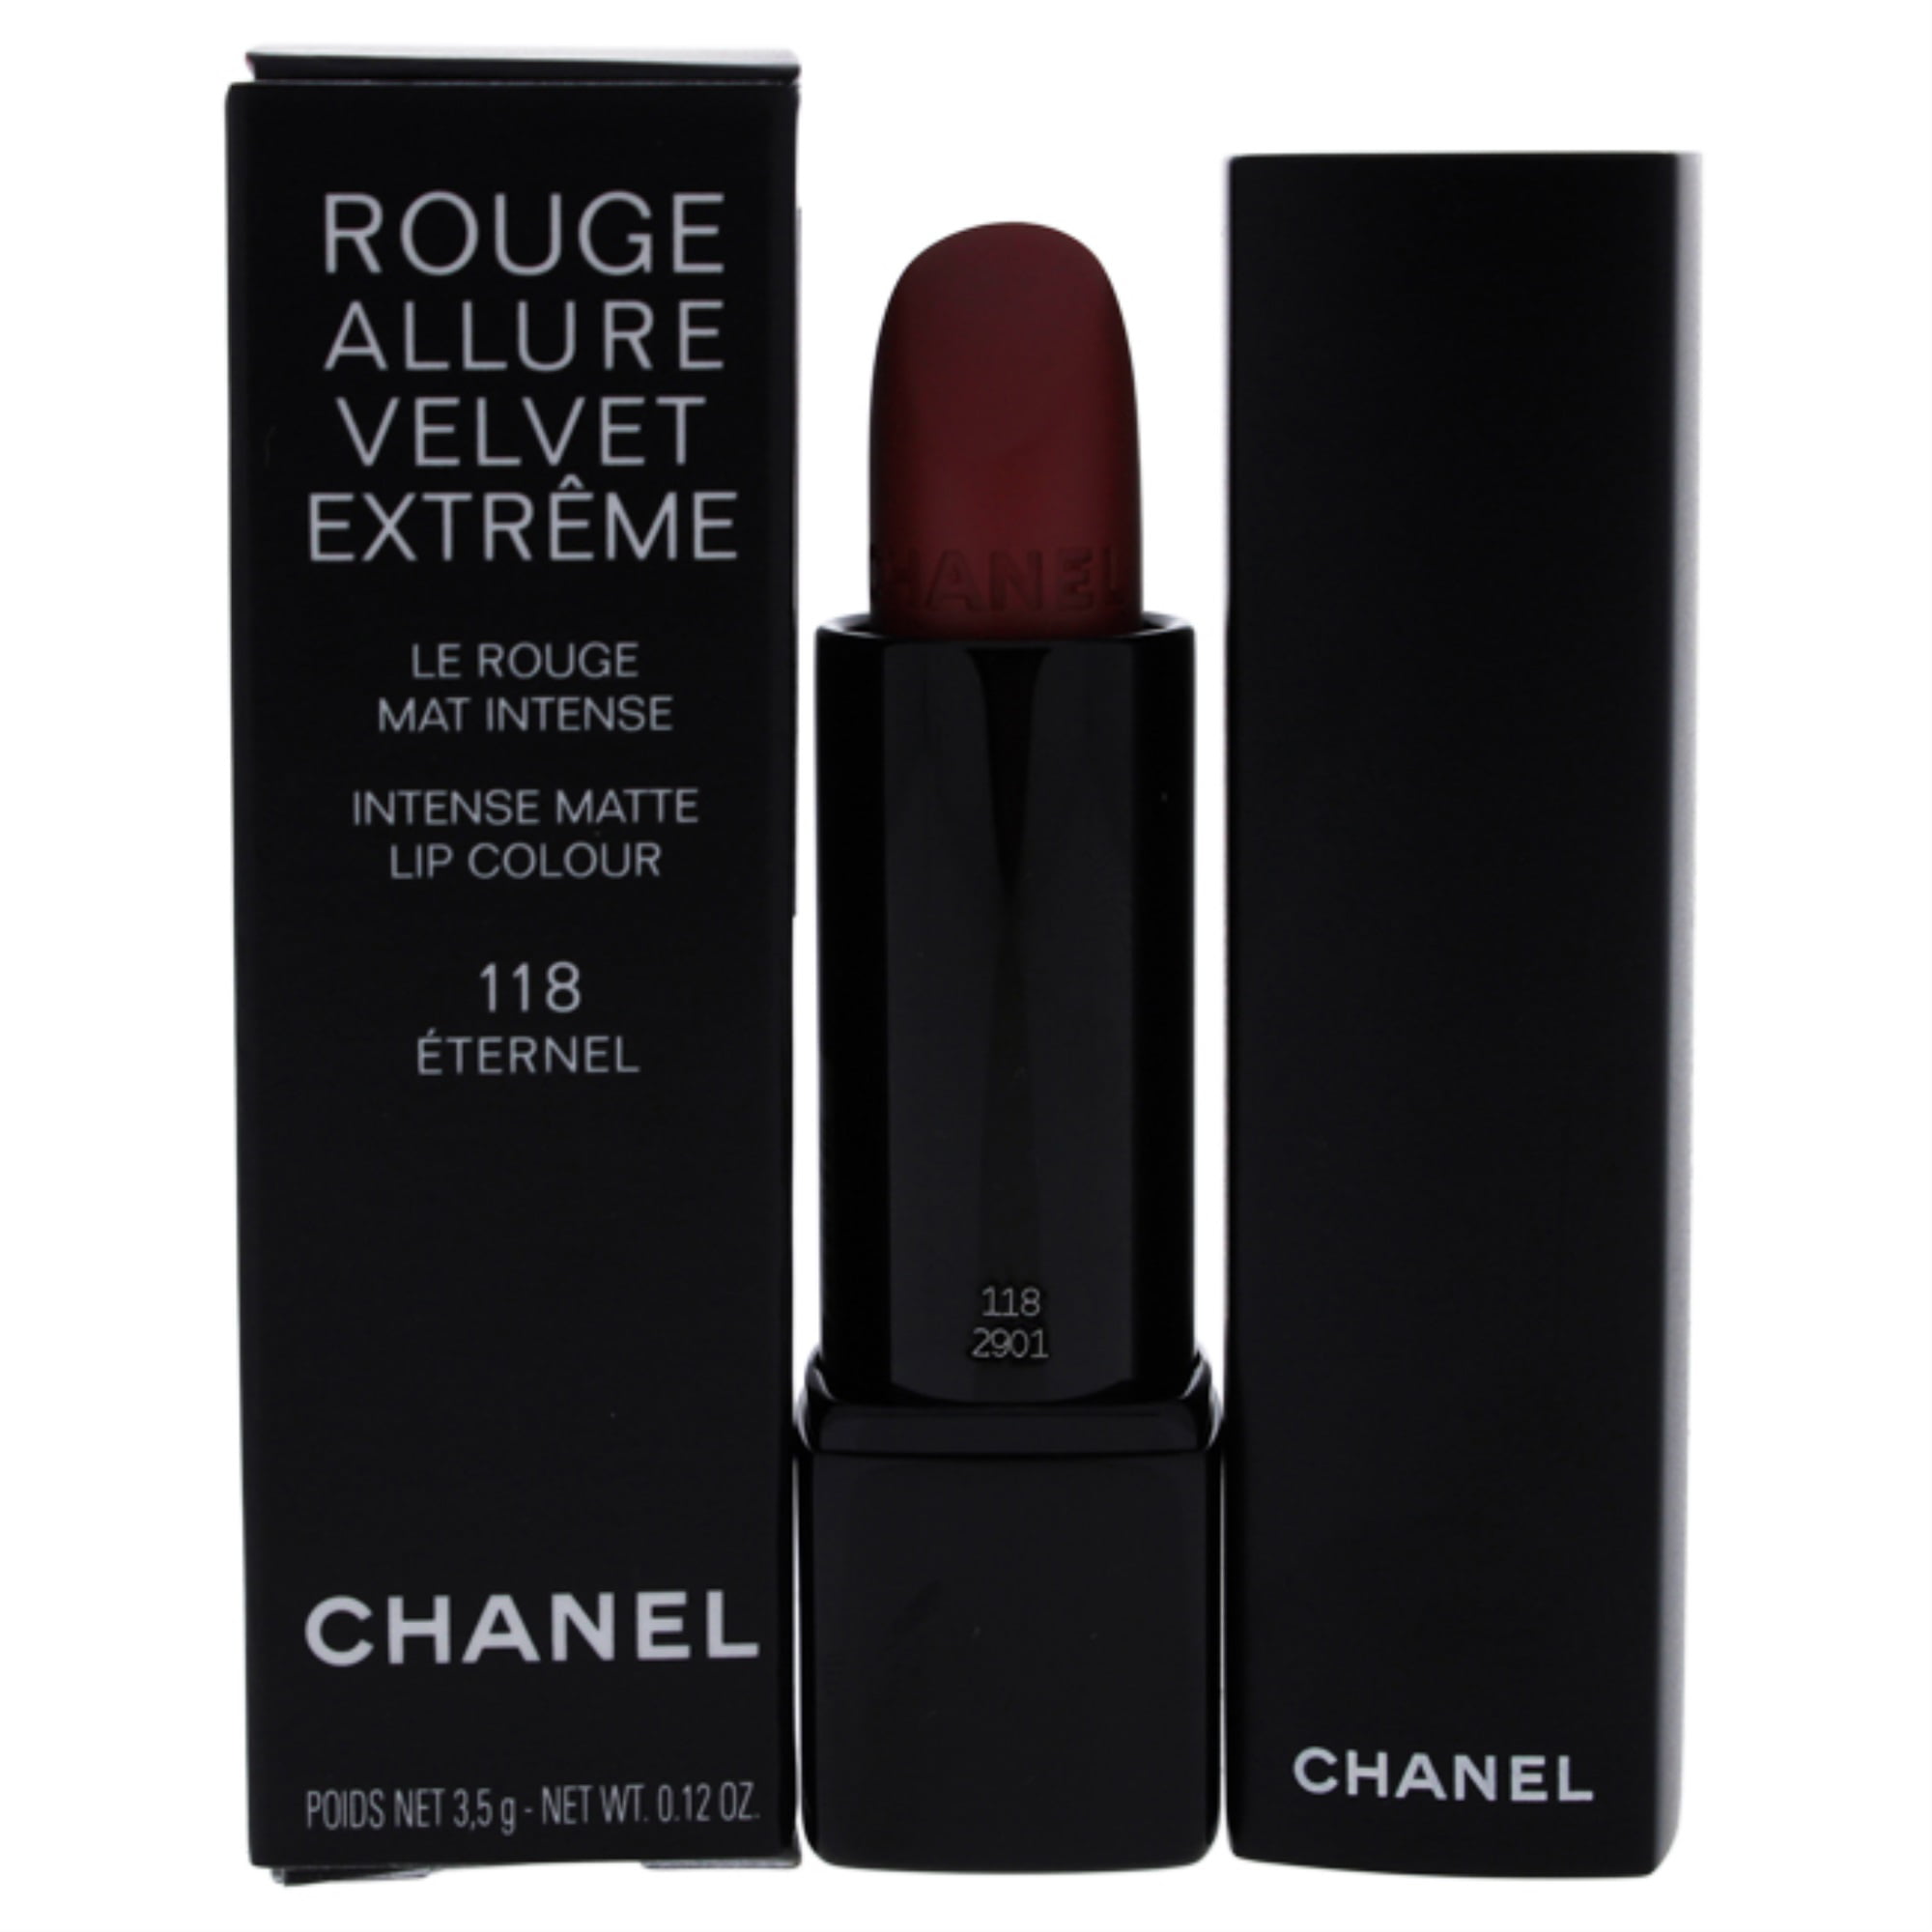 Rouge Allure Velvet Extreme - 118 Eternel by Chanel for Women - 0.12 oz  Lipstick 